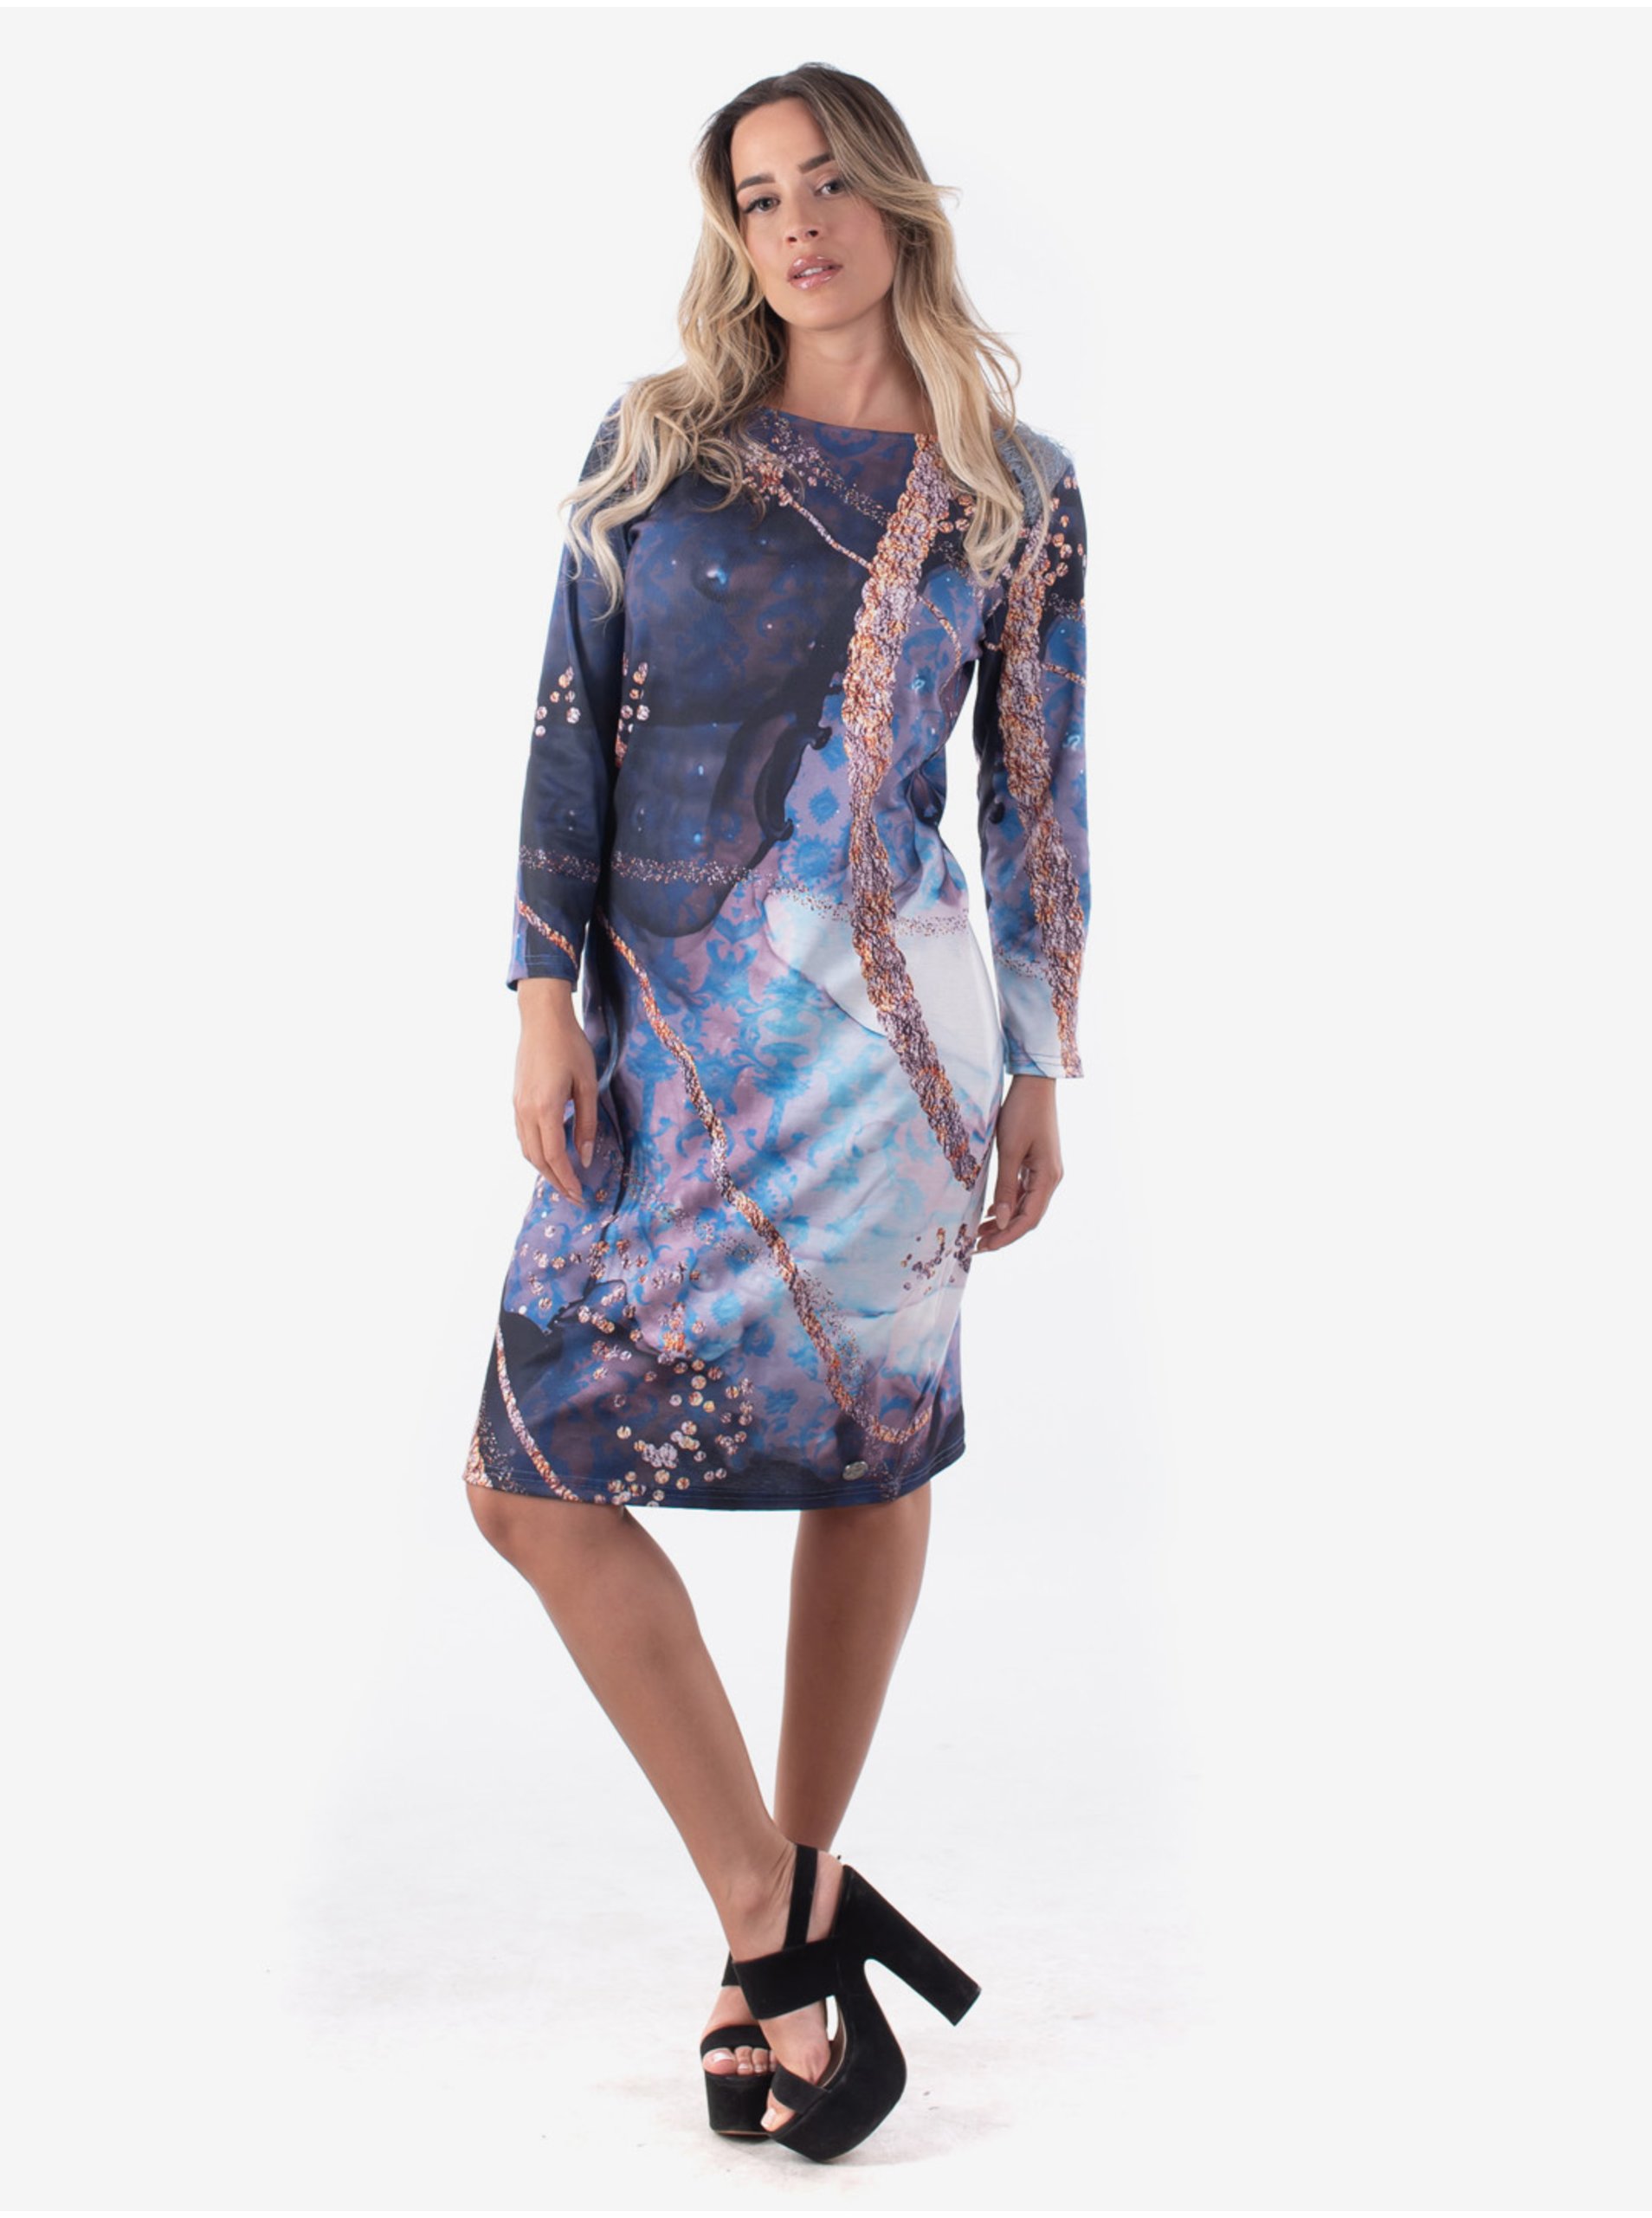 E-shop Modré šaty s abstraktním vzorem Culito from Spain Crepúsculo&Mar